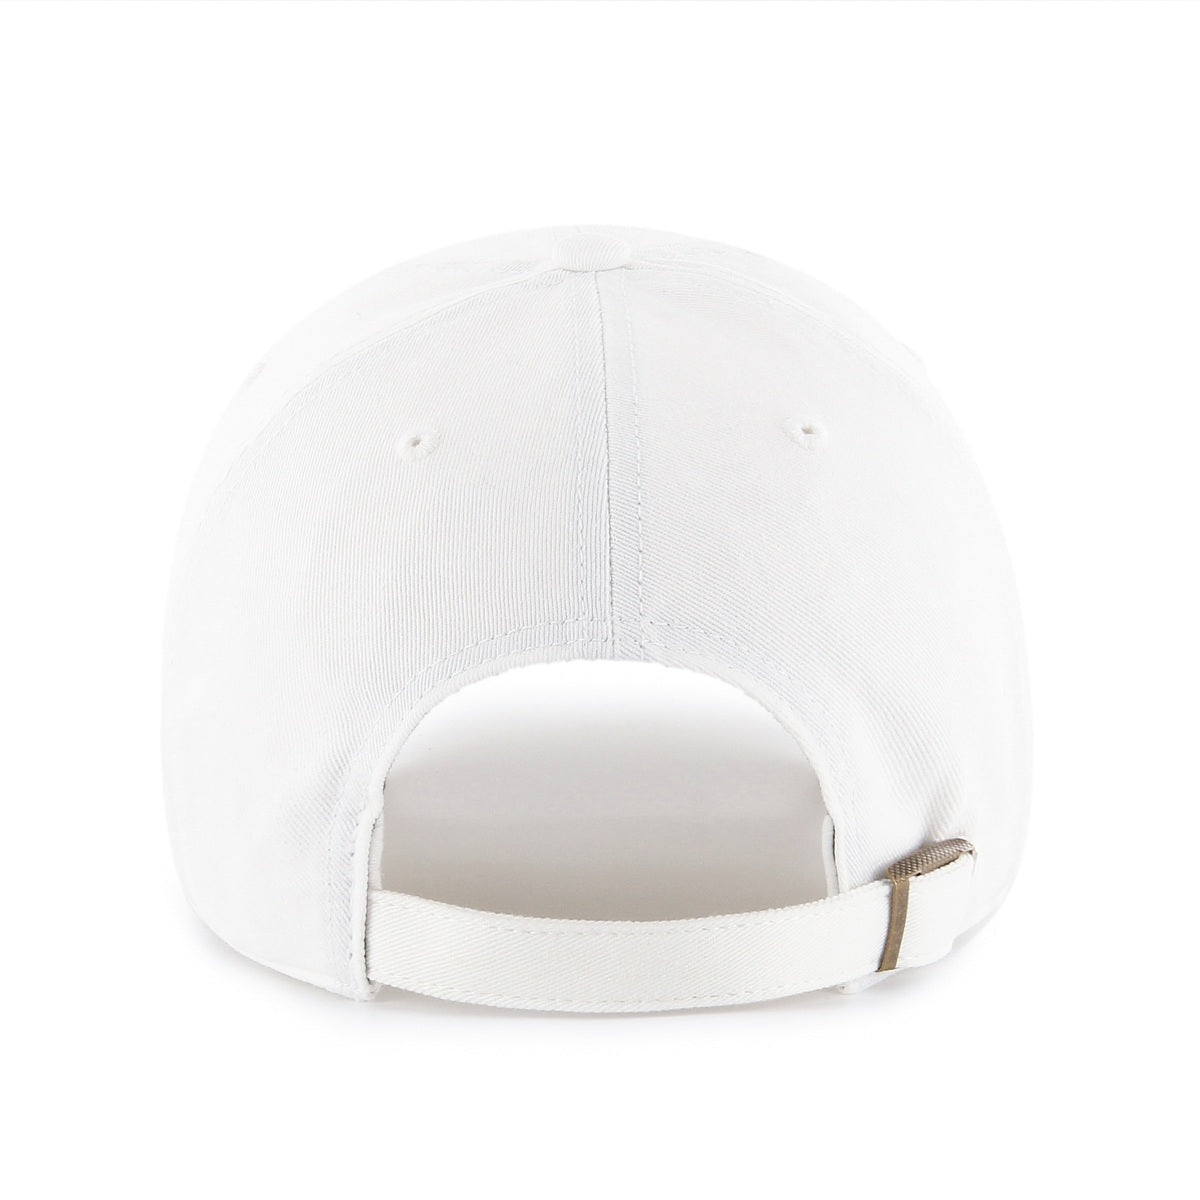 Tampa Bay Lightning '47 White Adjustable Clean Up Hat